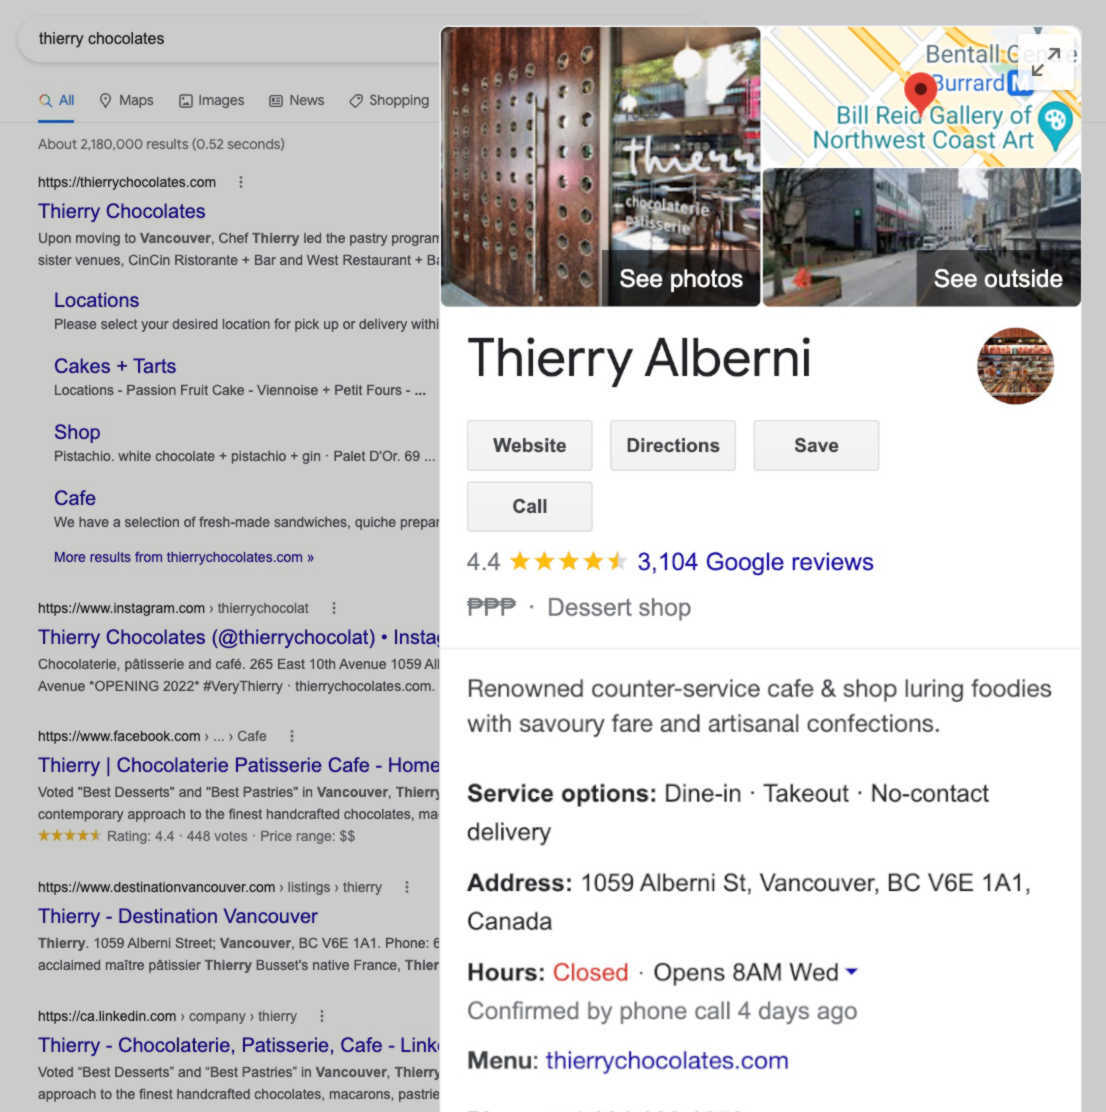 Thierry Alberni's Google Business Profile